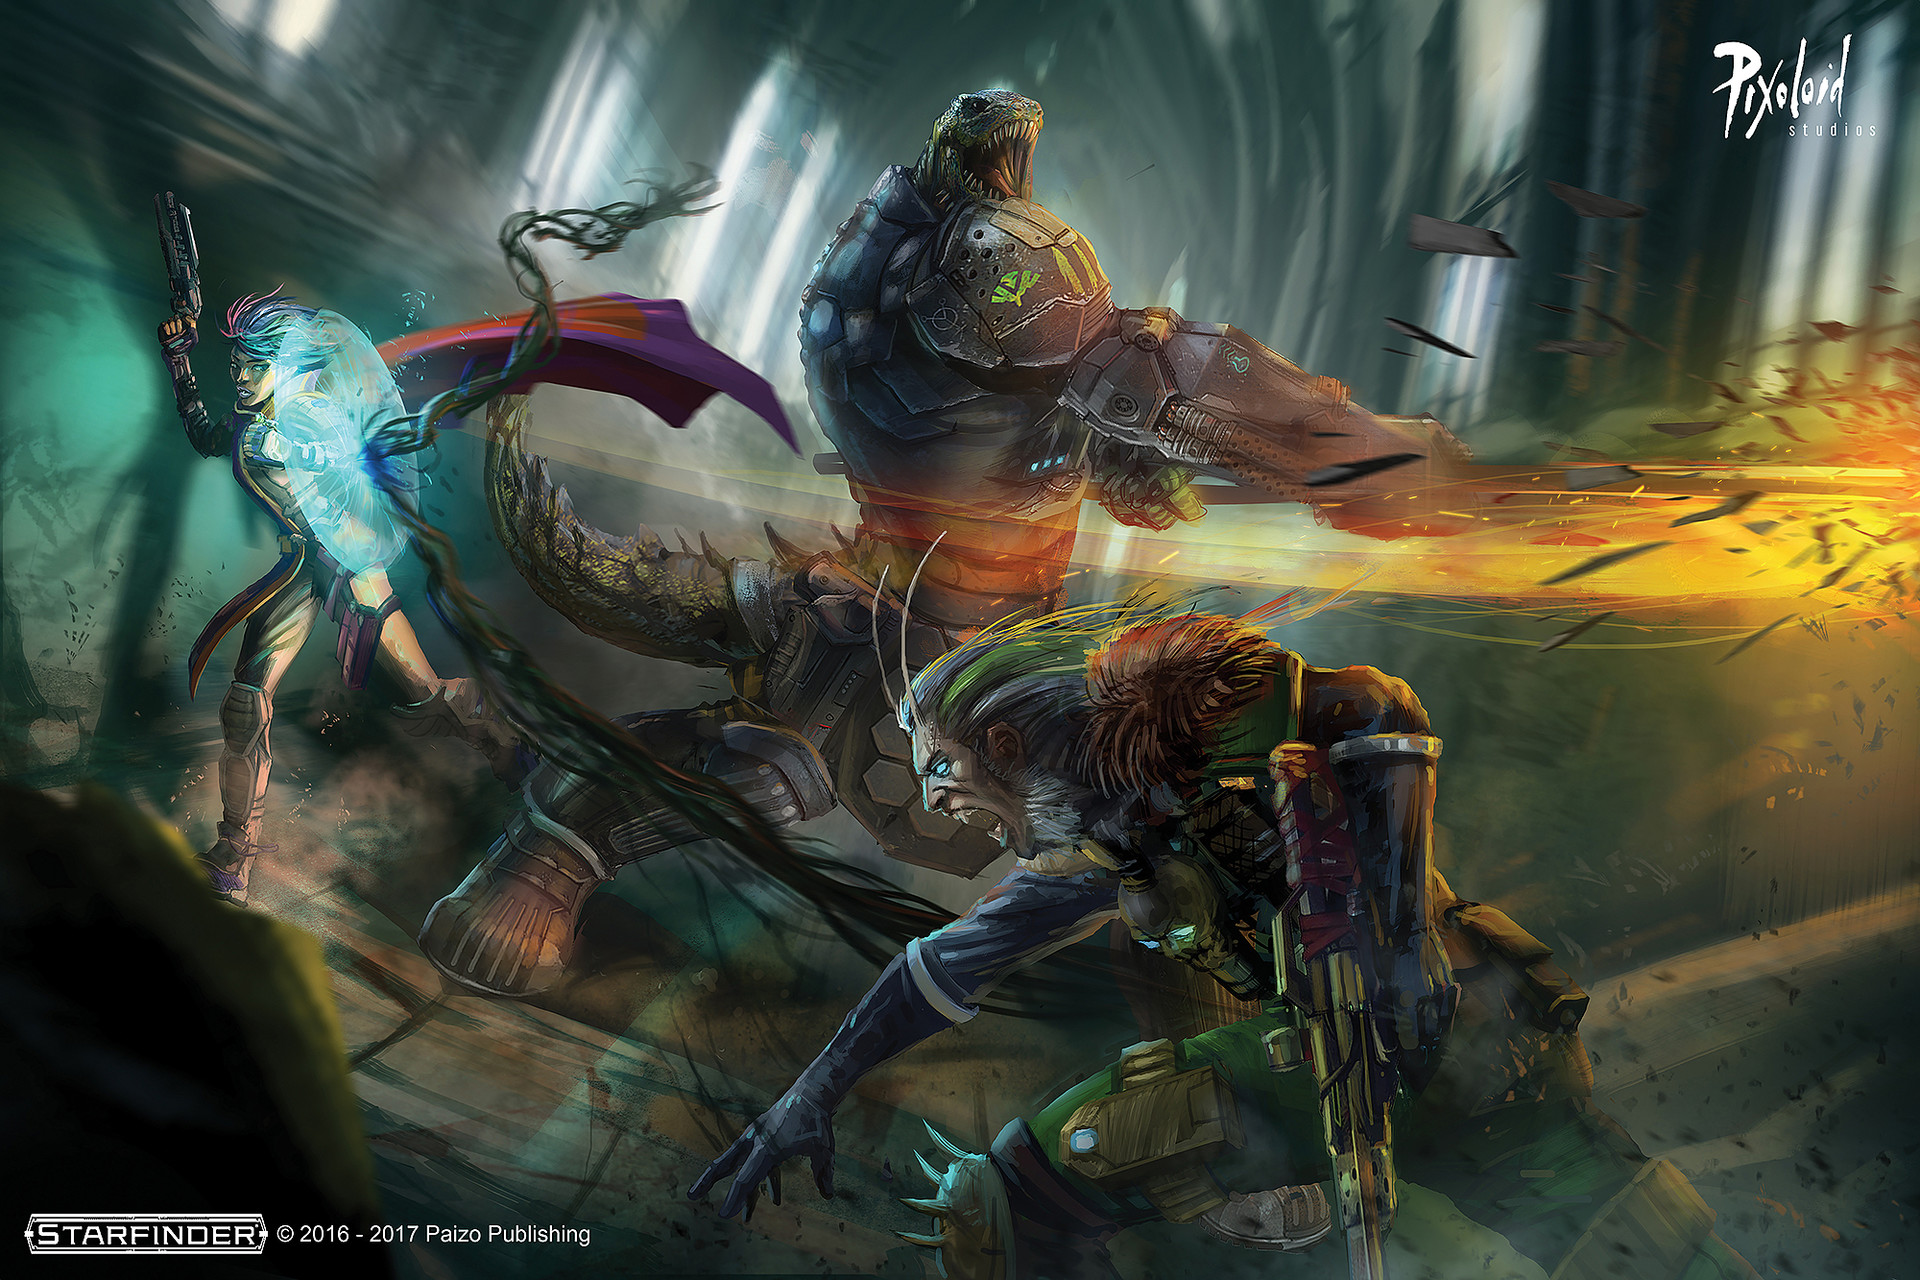 Battle scene illustration for a scifi rpg by Paizo publishing